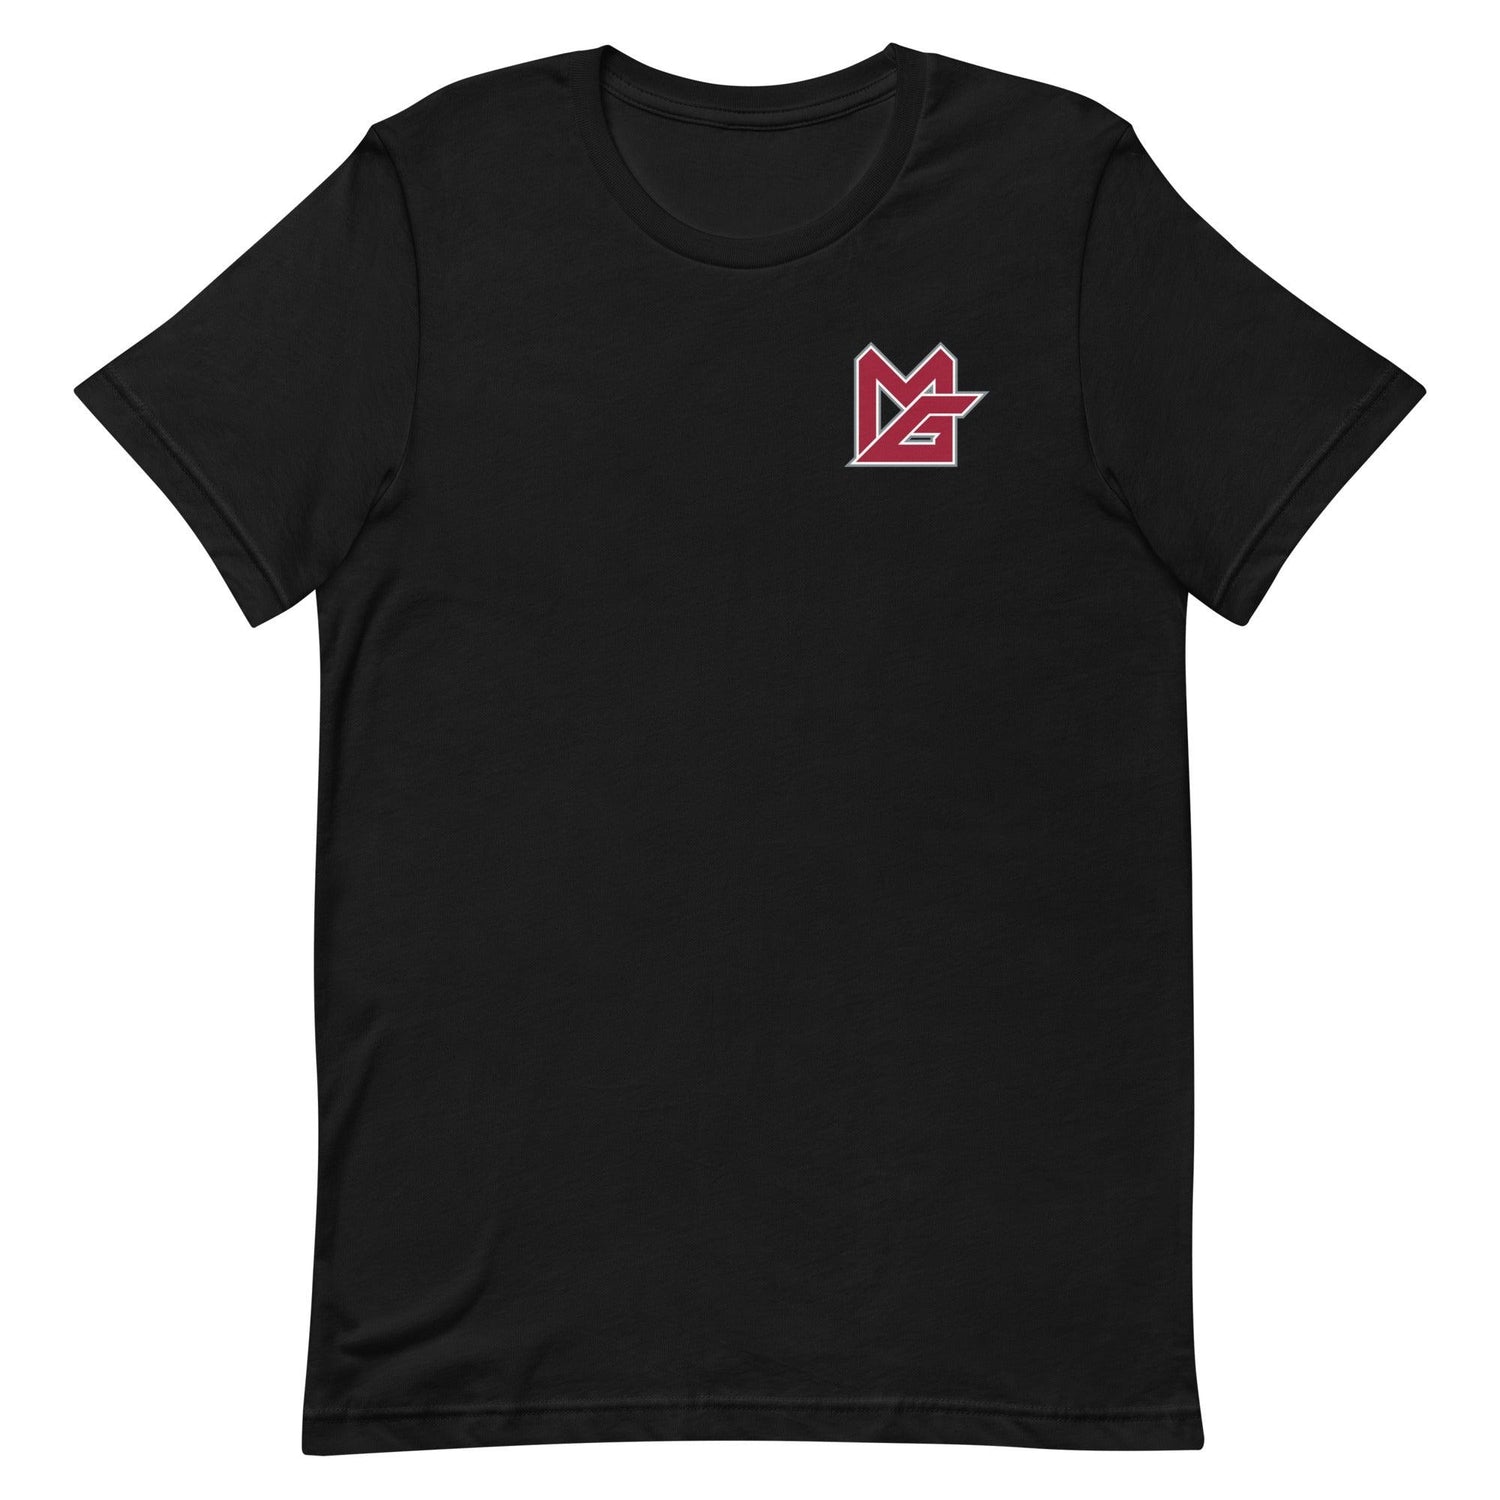 Monkell Goodwine "MG" t-shirt - Fan Arch